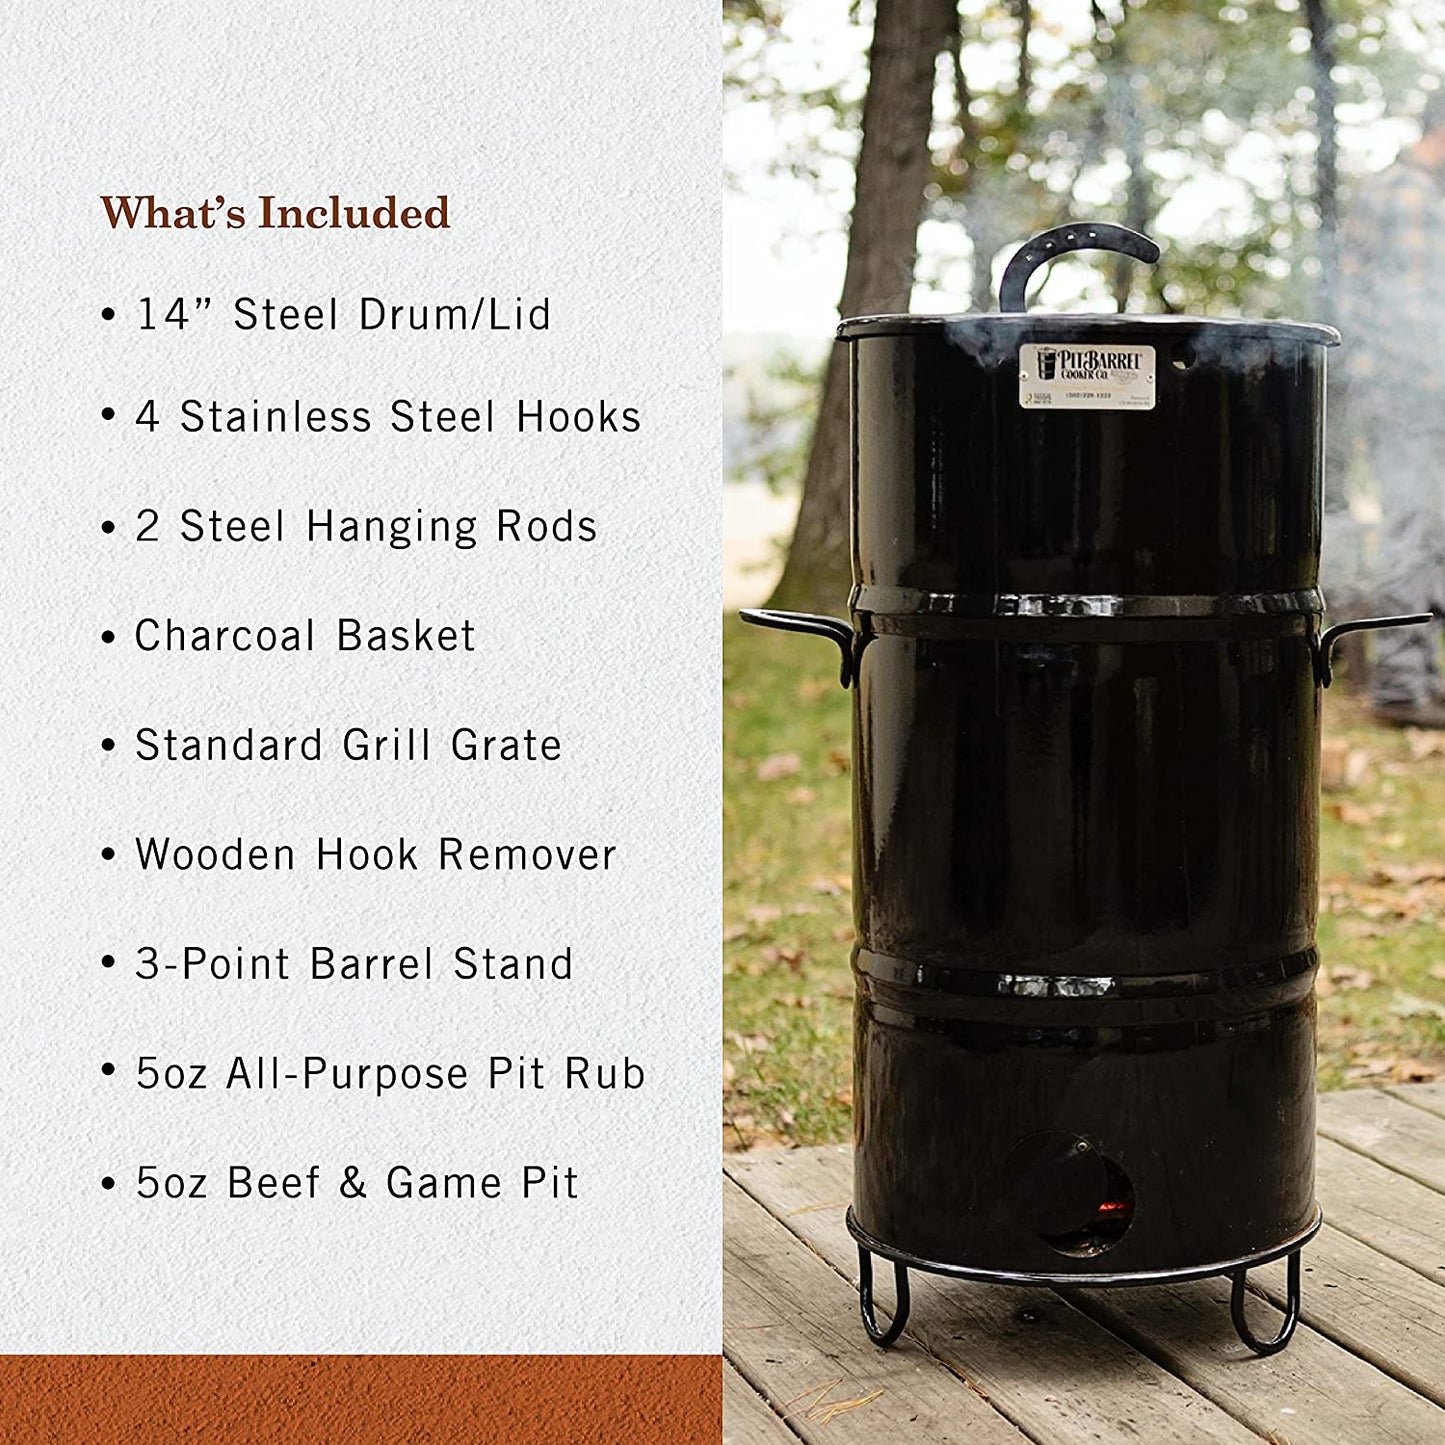 Pit Barrel Cooker Junior Package - 14 Inch Drum Smoker | Porcelain Coated Steel Drum BBQ Grill